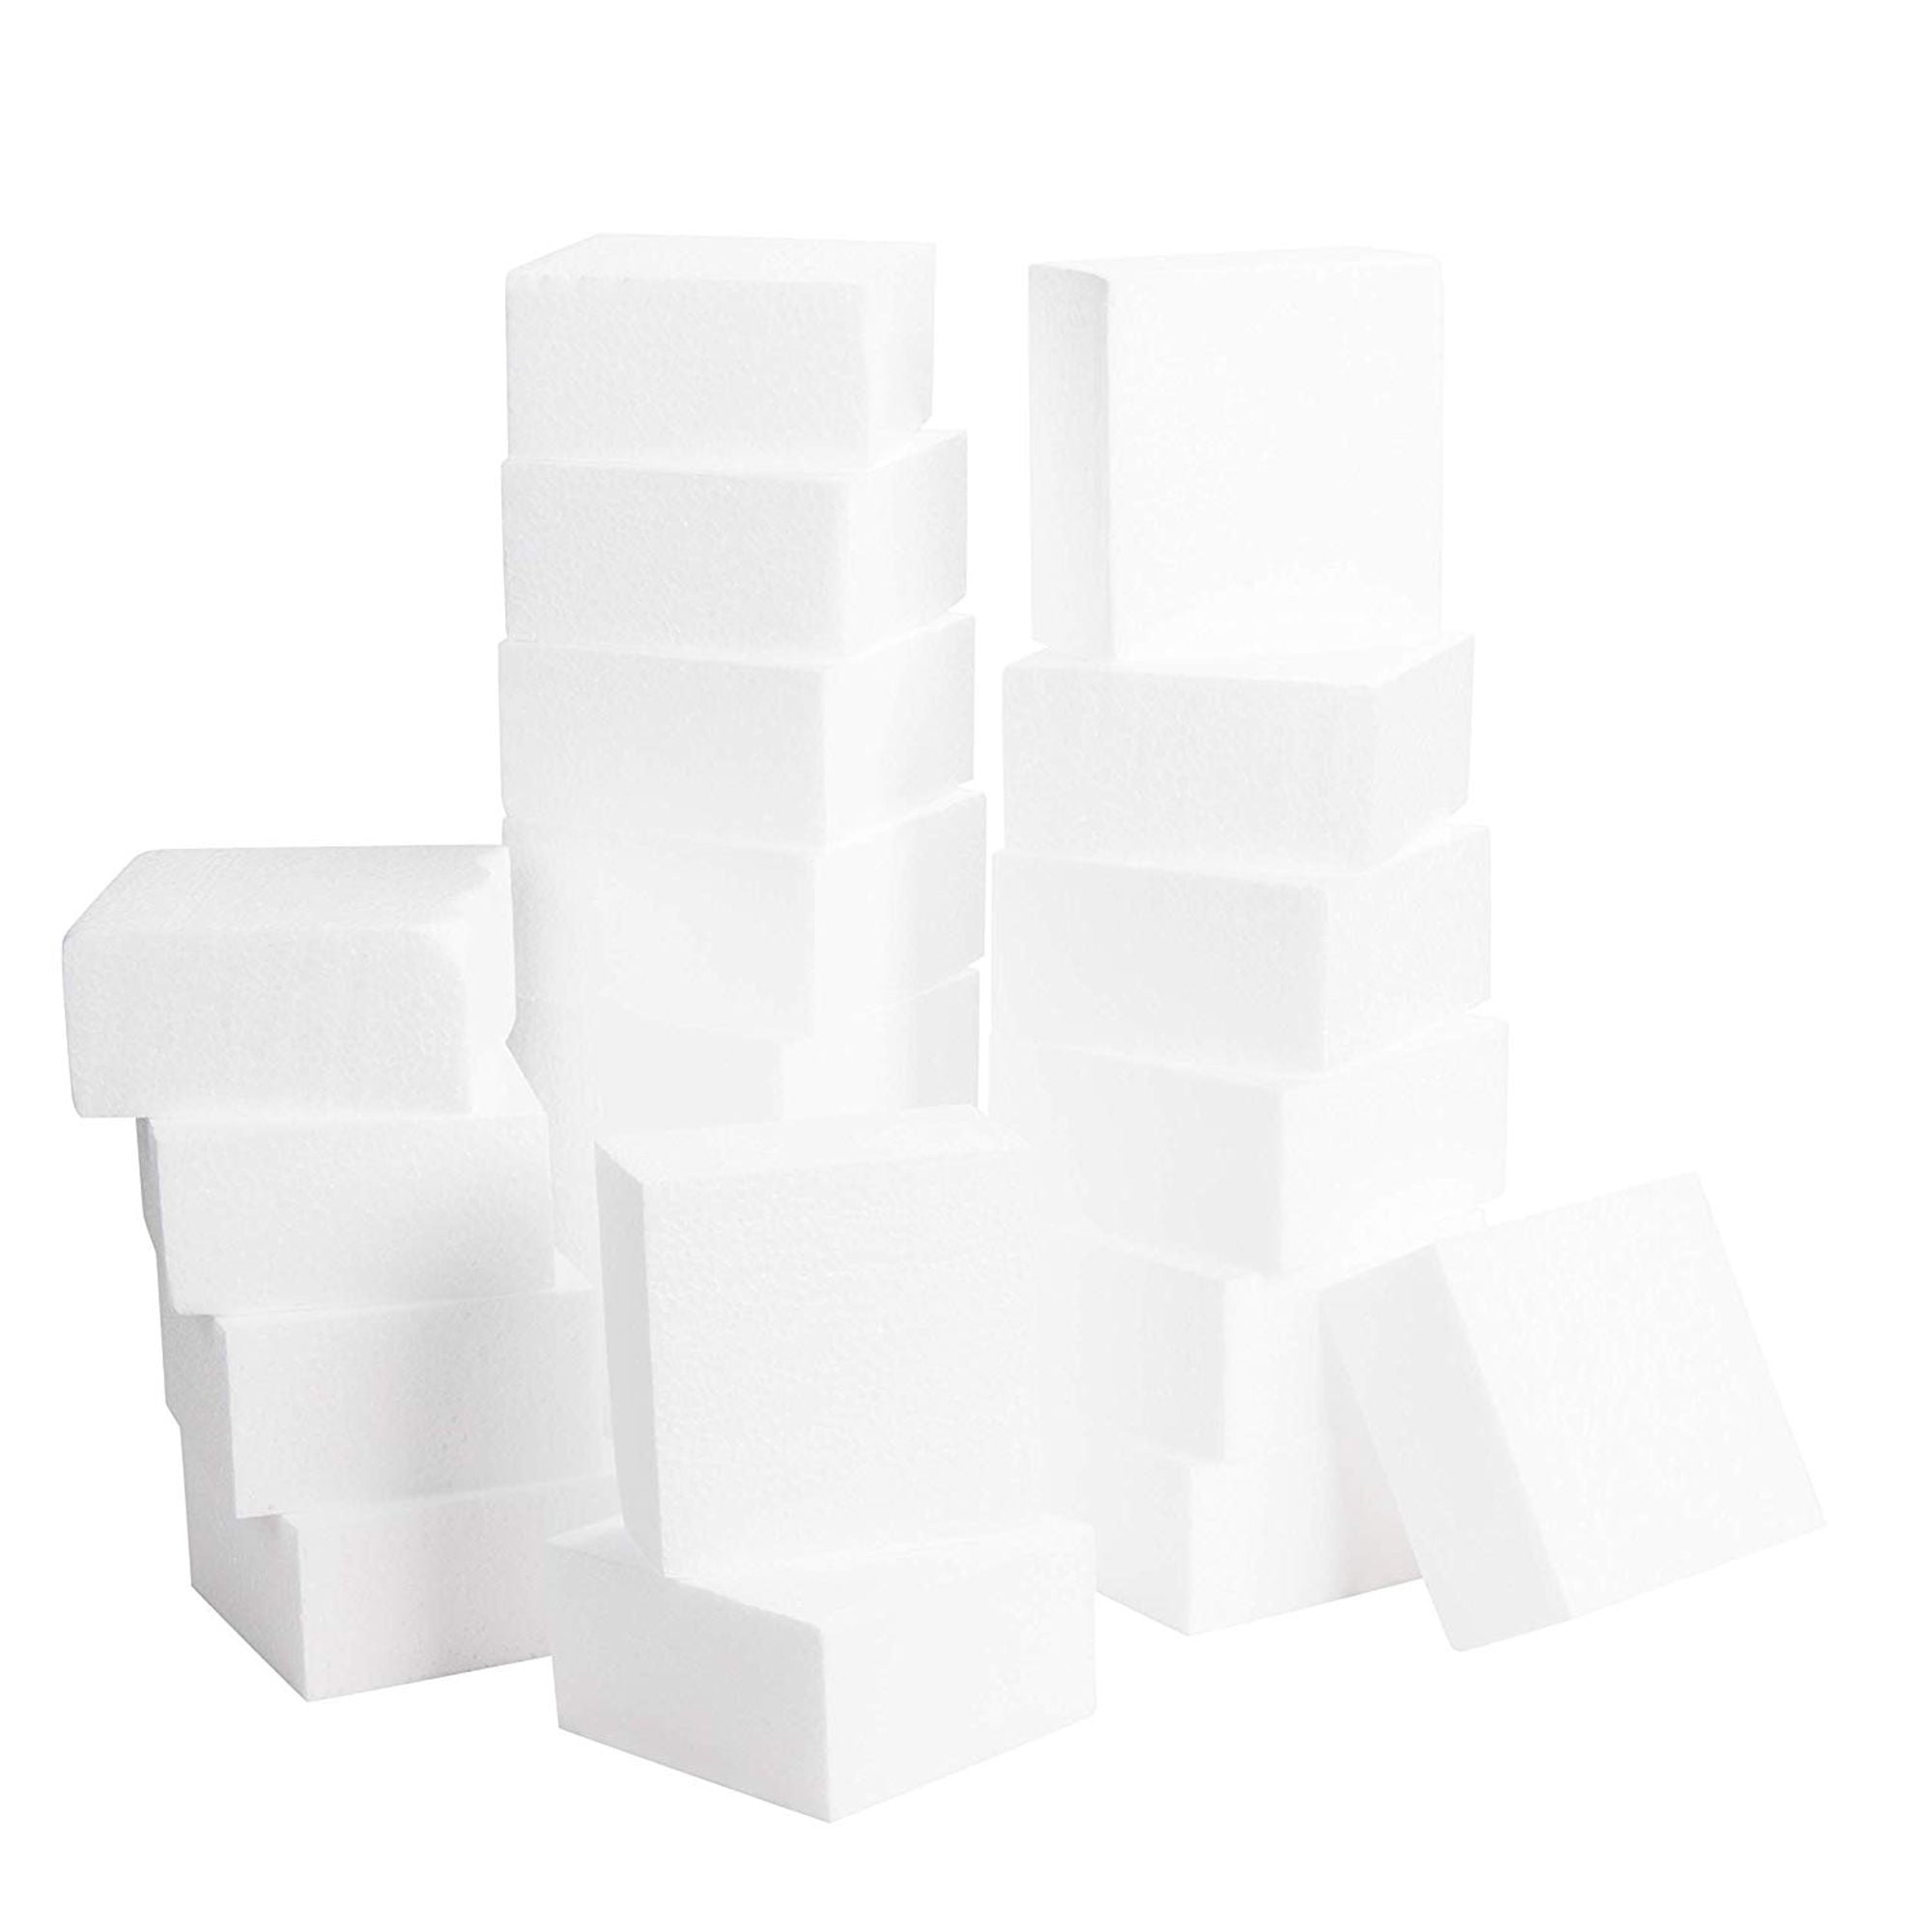 4 inch foam block